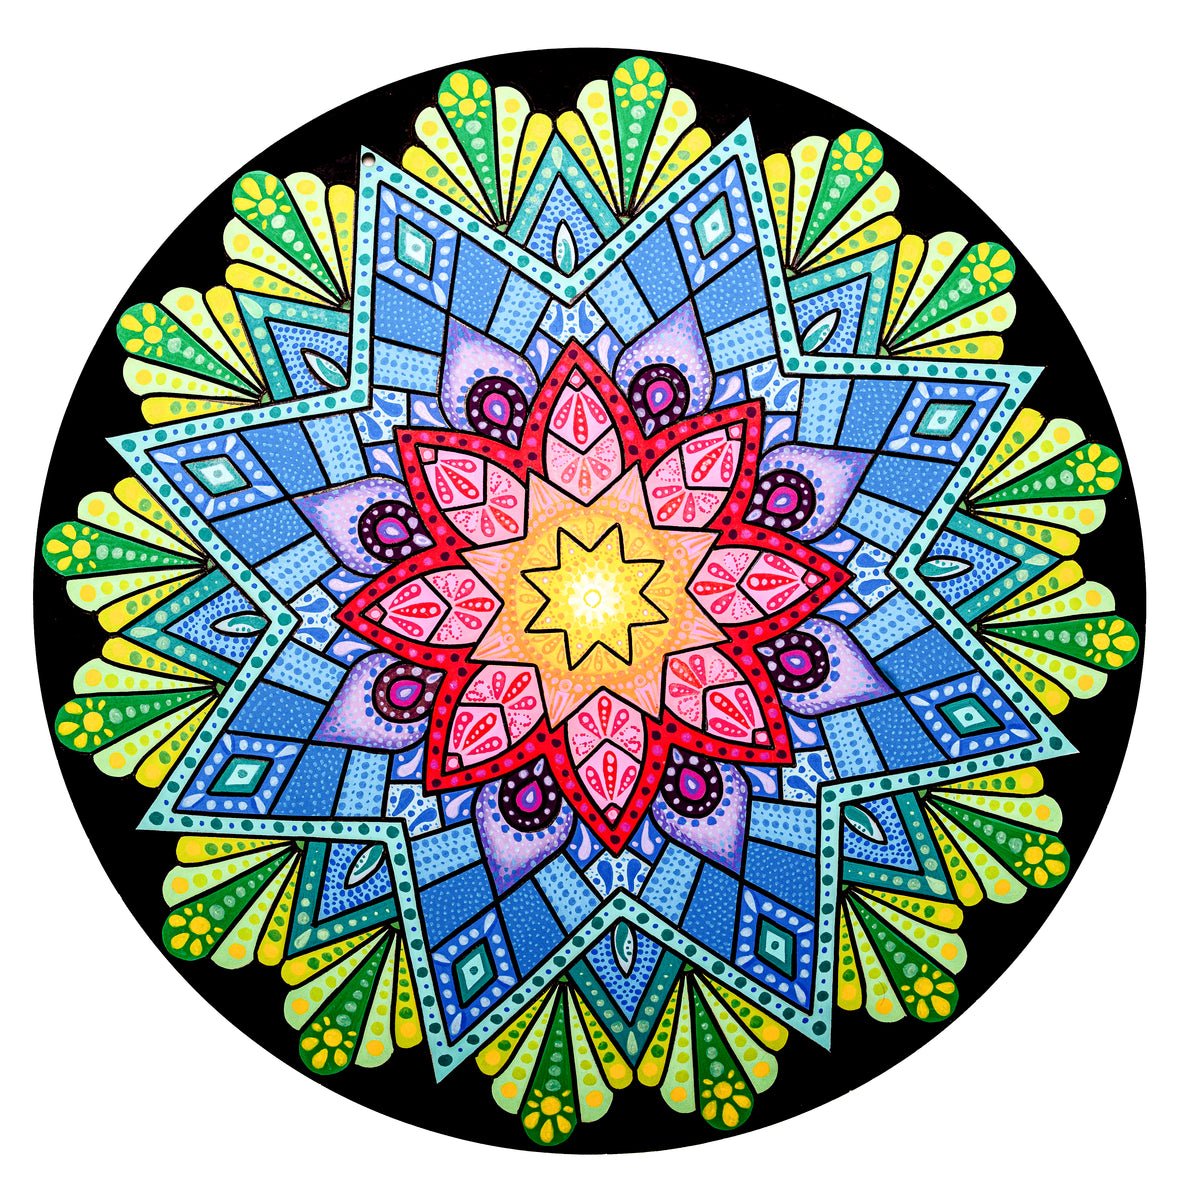 Life of Colour Mandala Painting Kit - Bundle of 3 (Part 2 - Essentials)